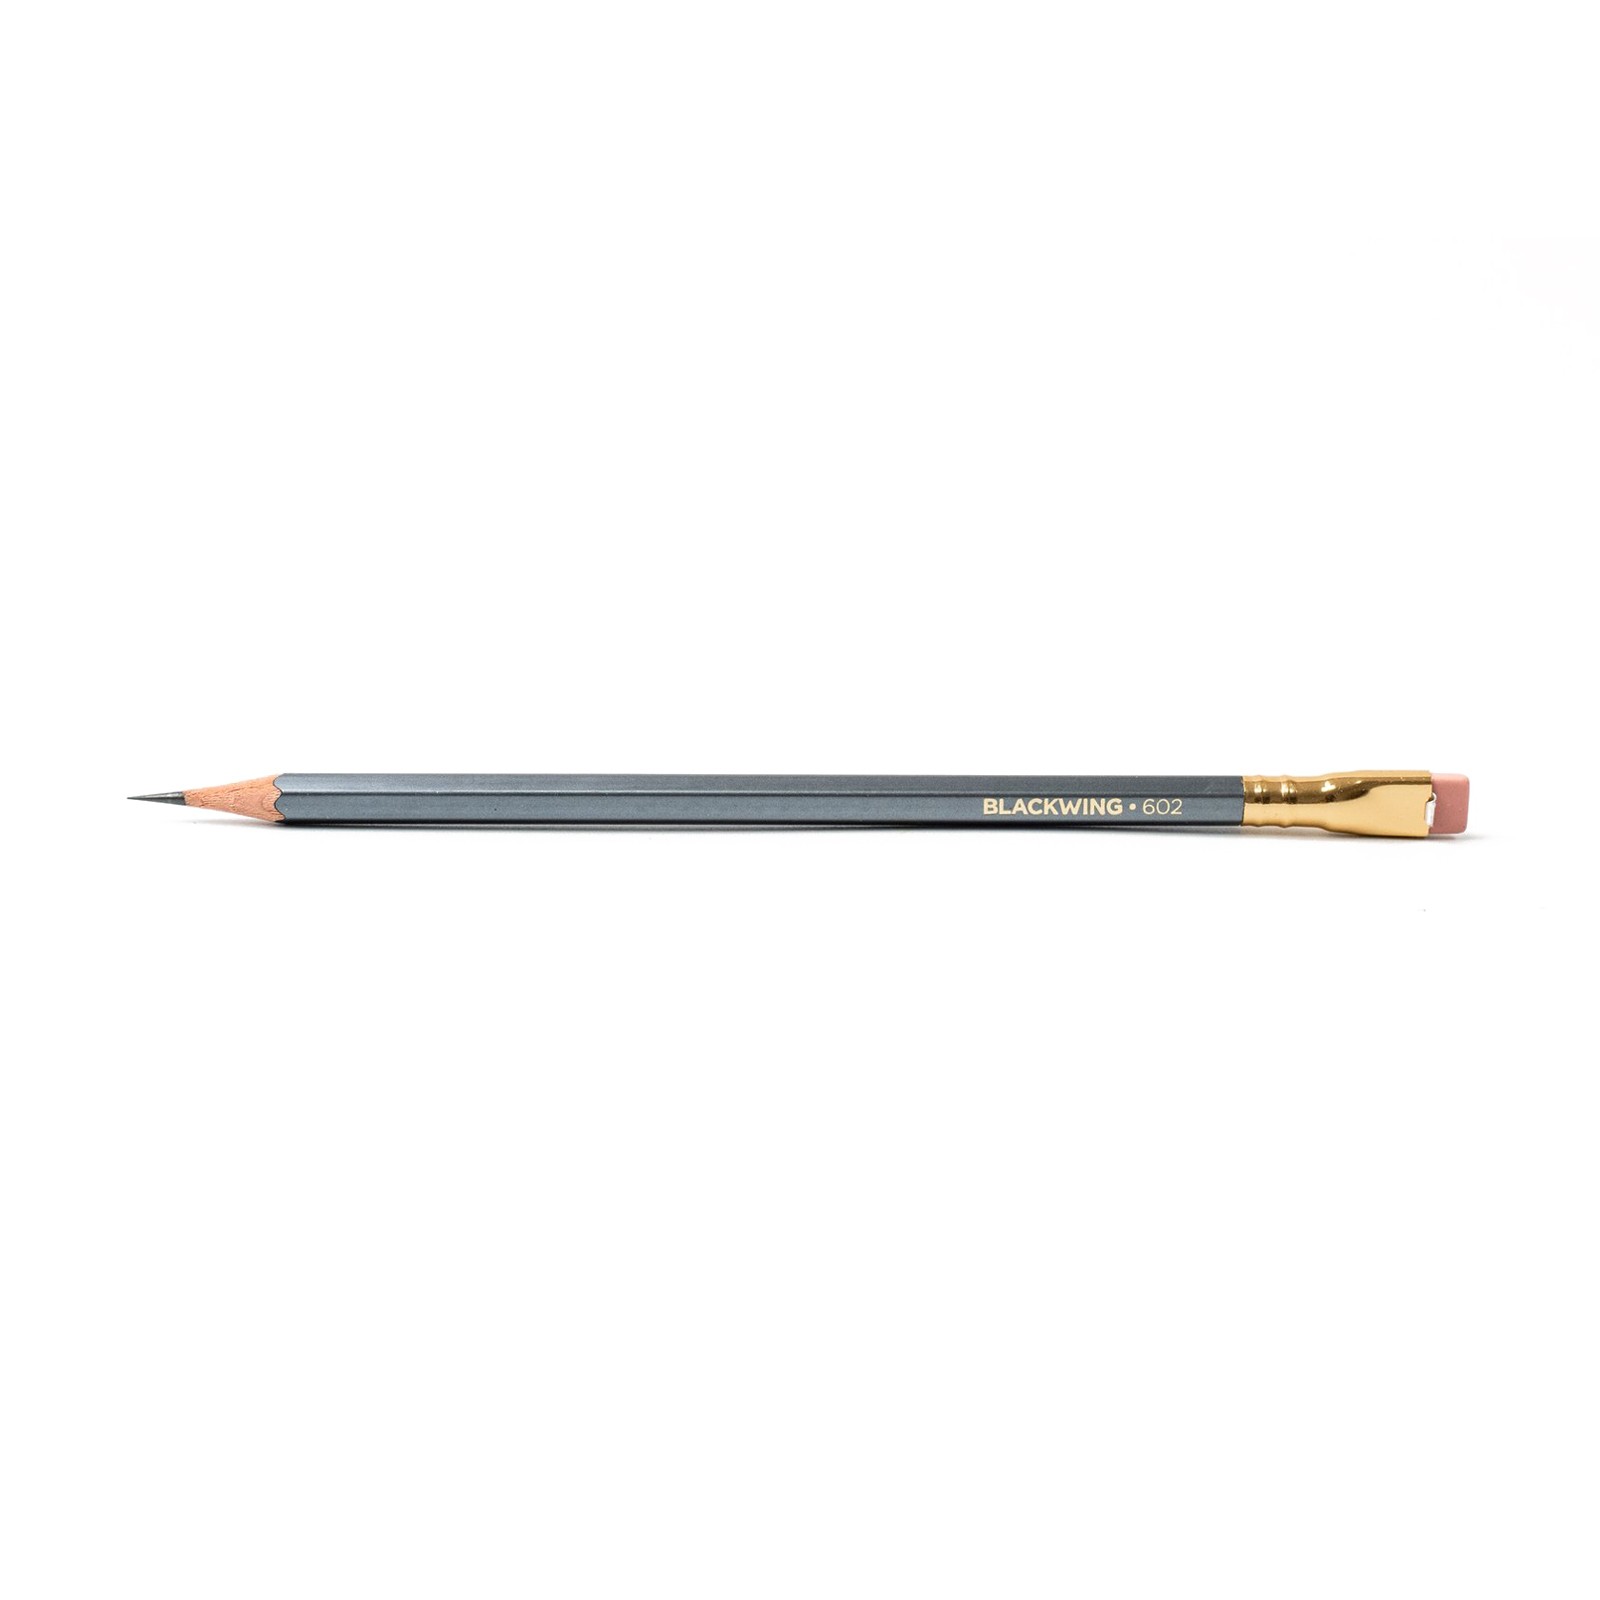 Pink Eraser Cedar Wood 3 Blackwing 602 Pencils Palomino Firm Graphite